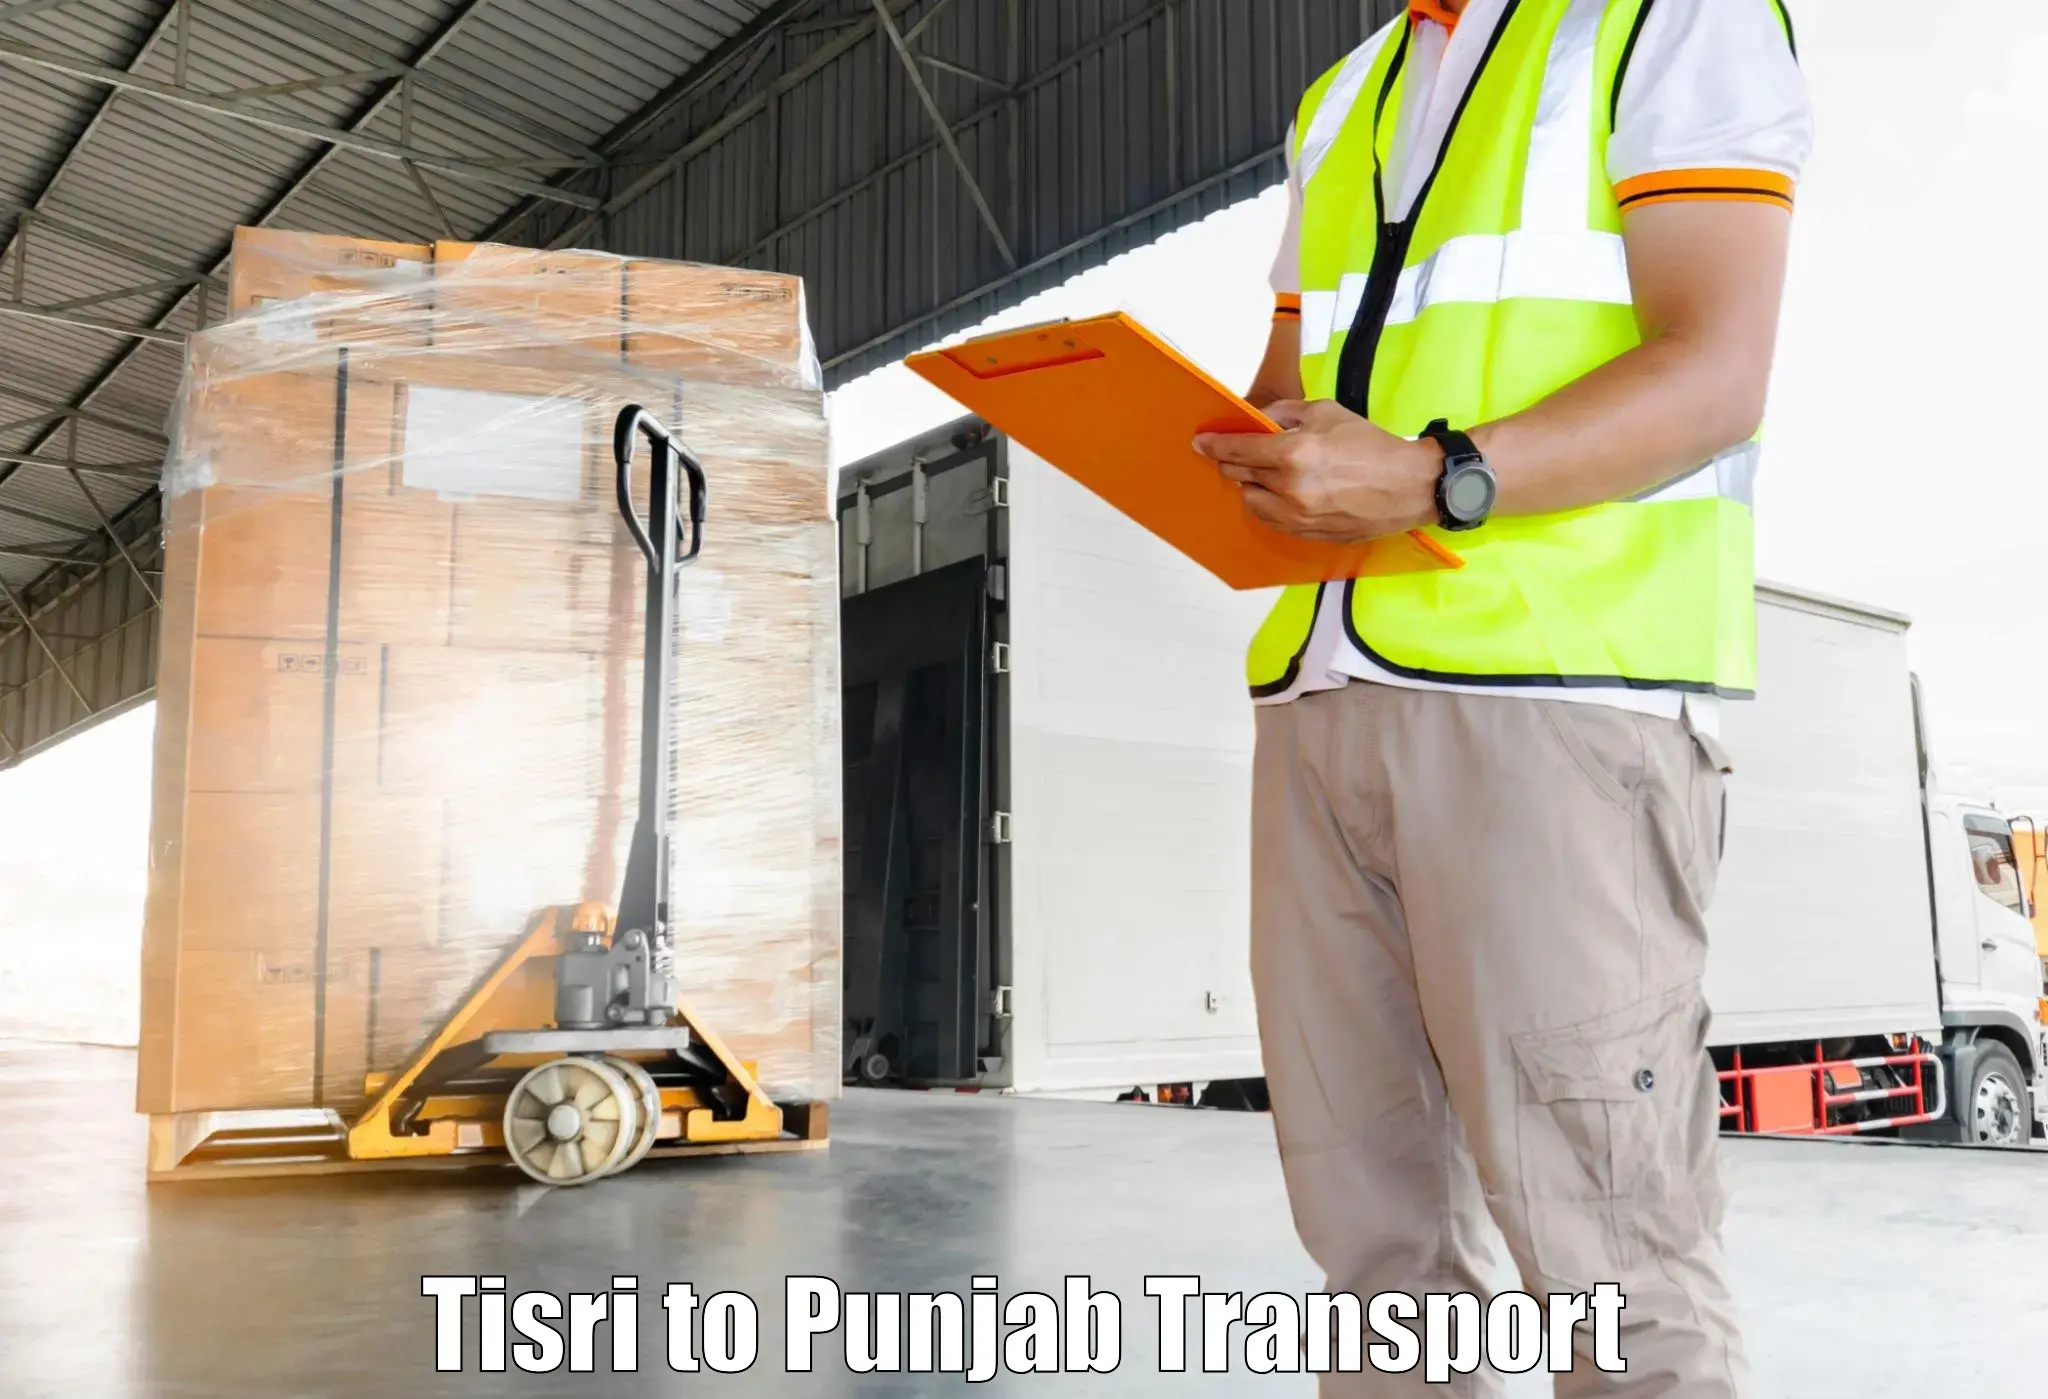 Furniture transport service Tisri to Patiala